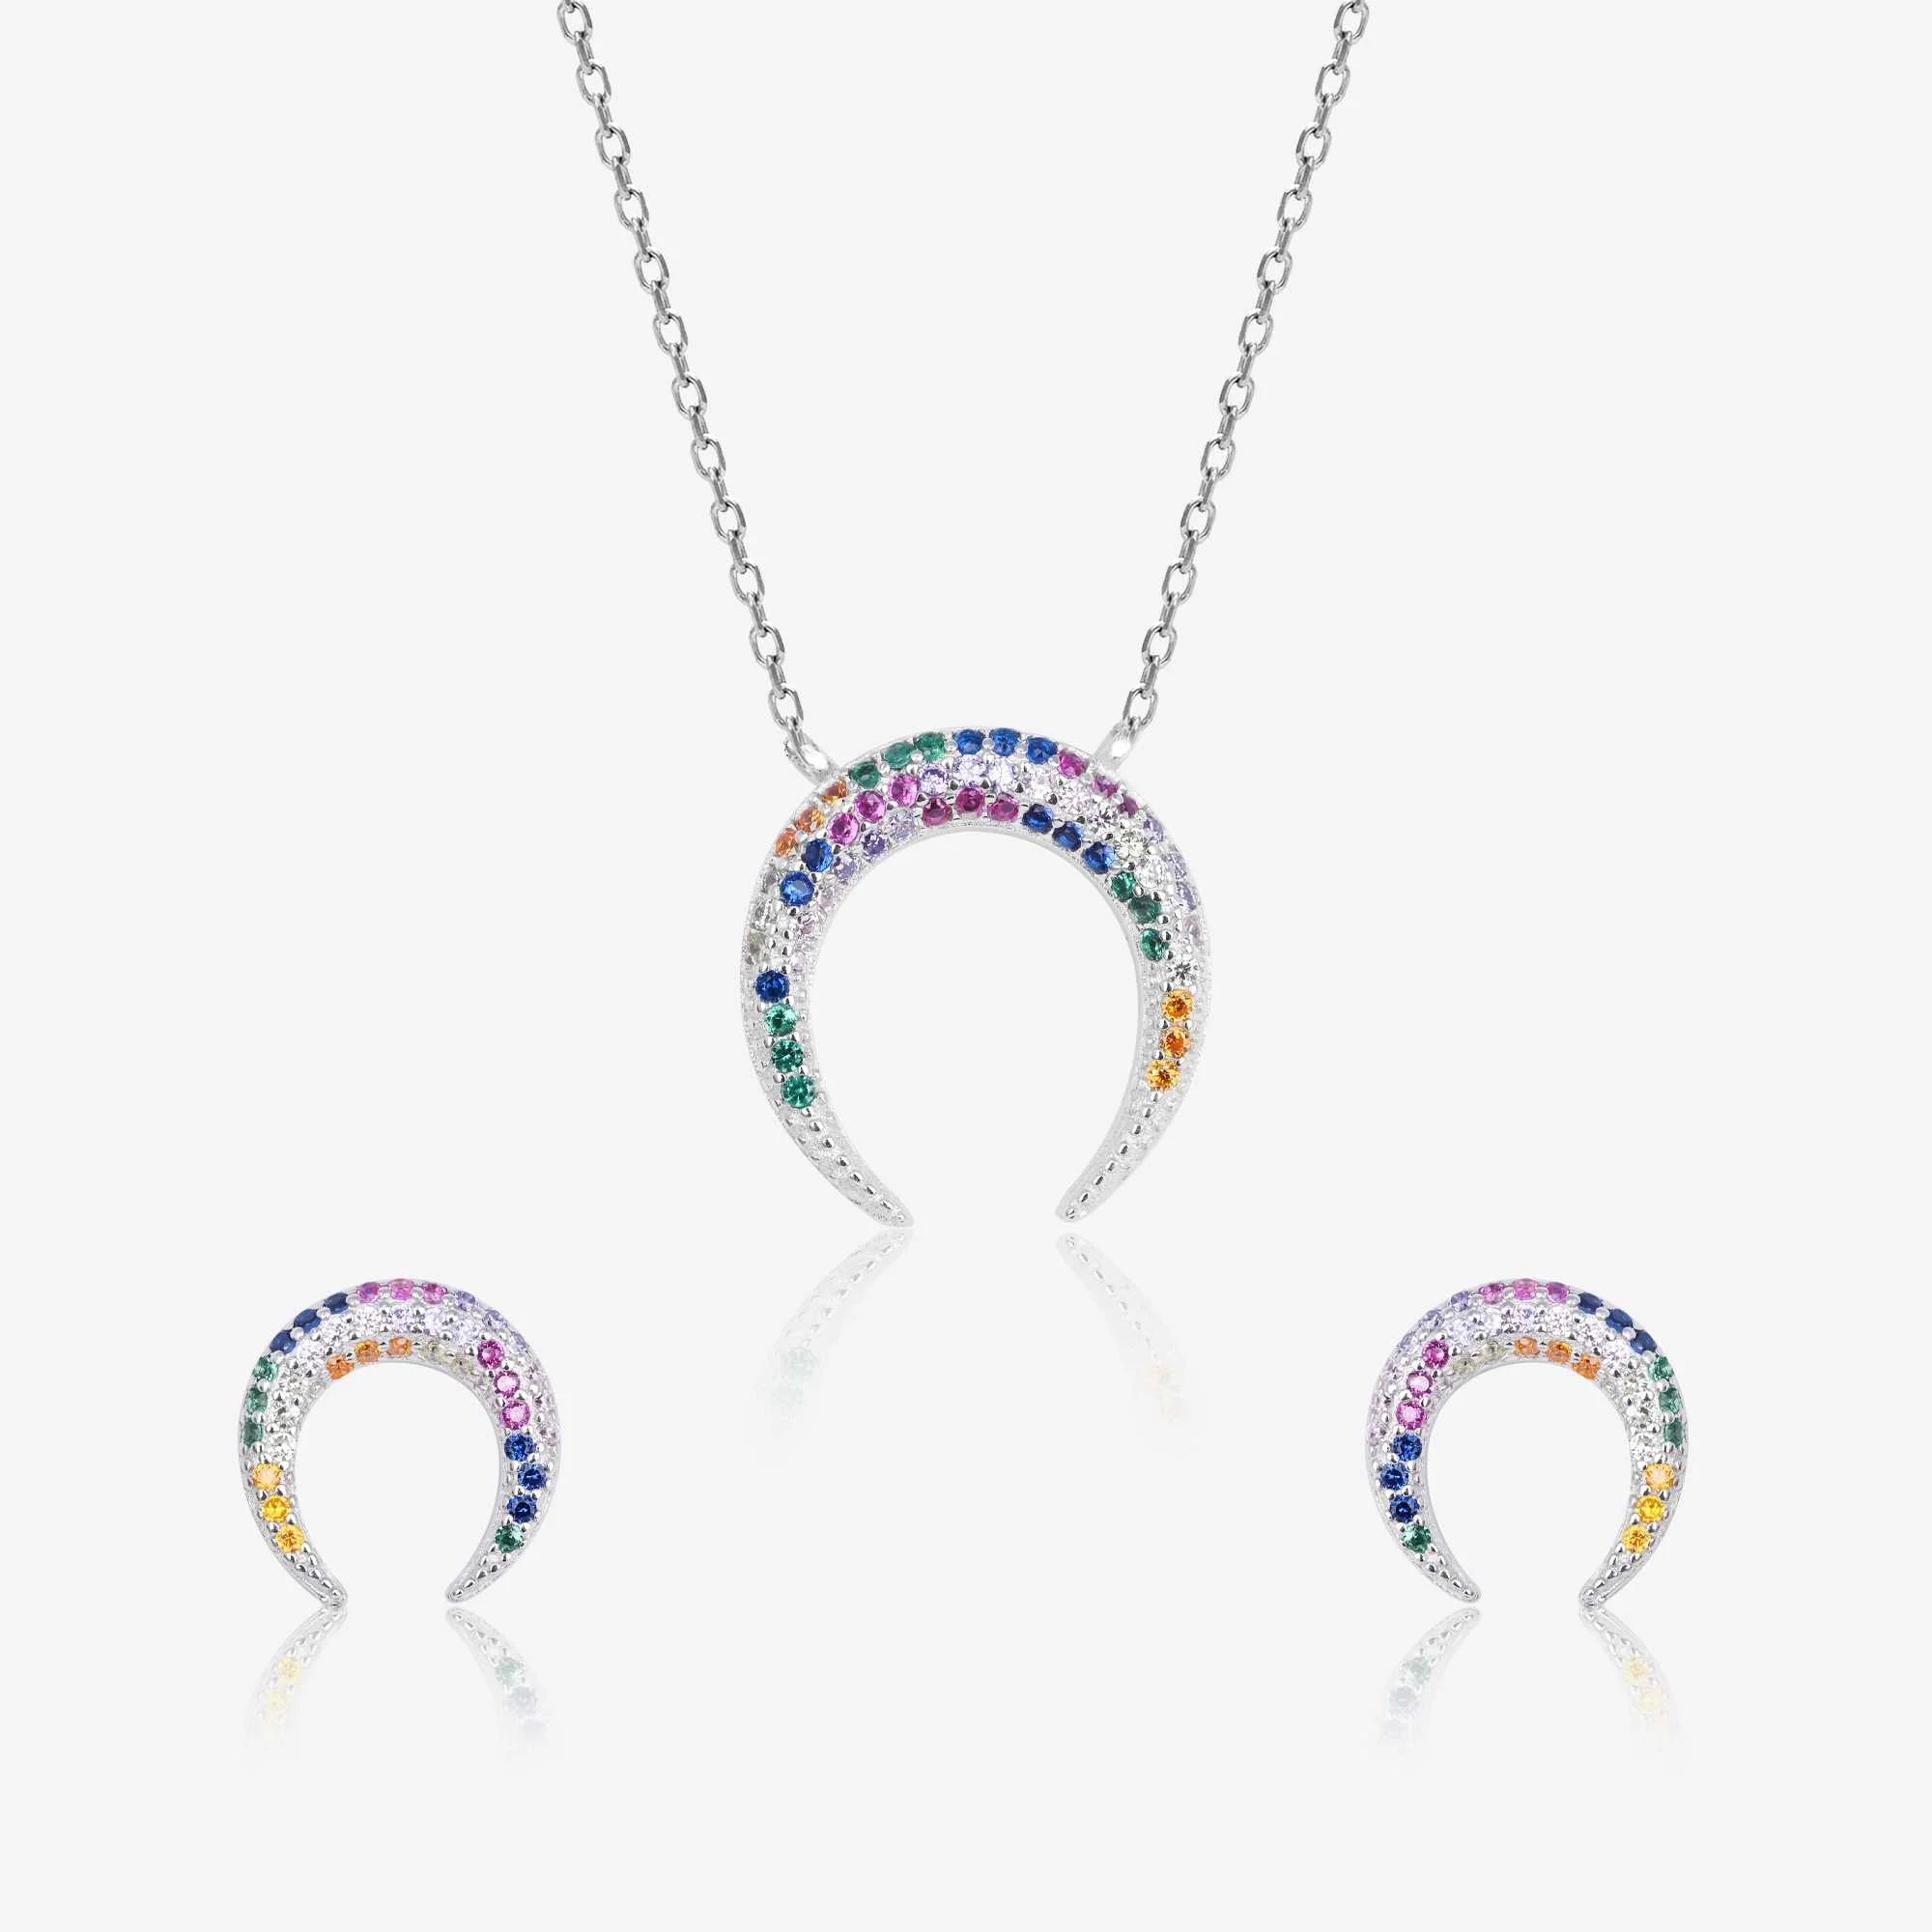 Celestial Harmony Necklace Set